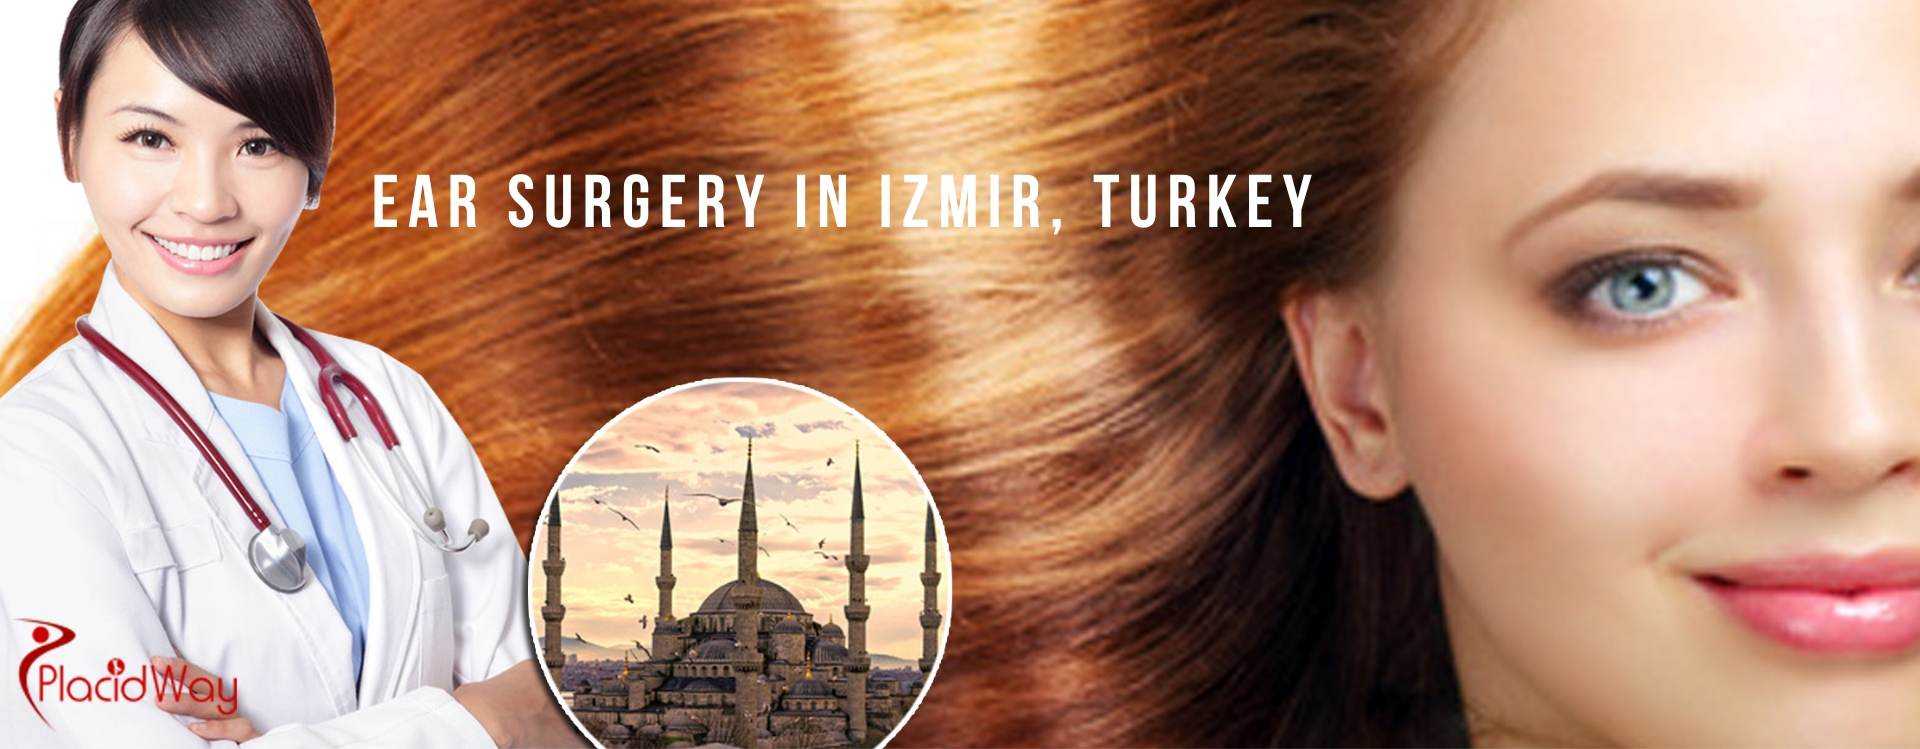 Ear Surgery in Izmir, Turkey